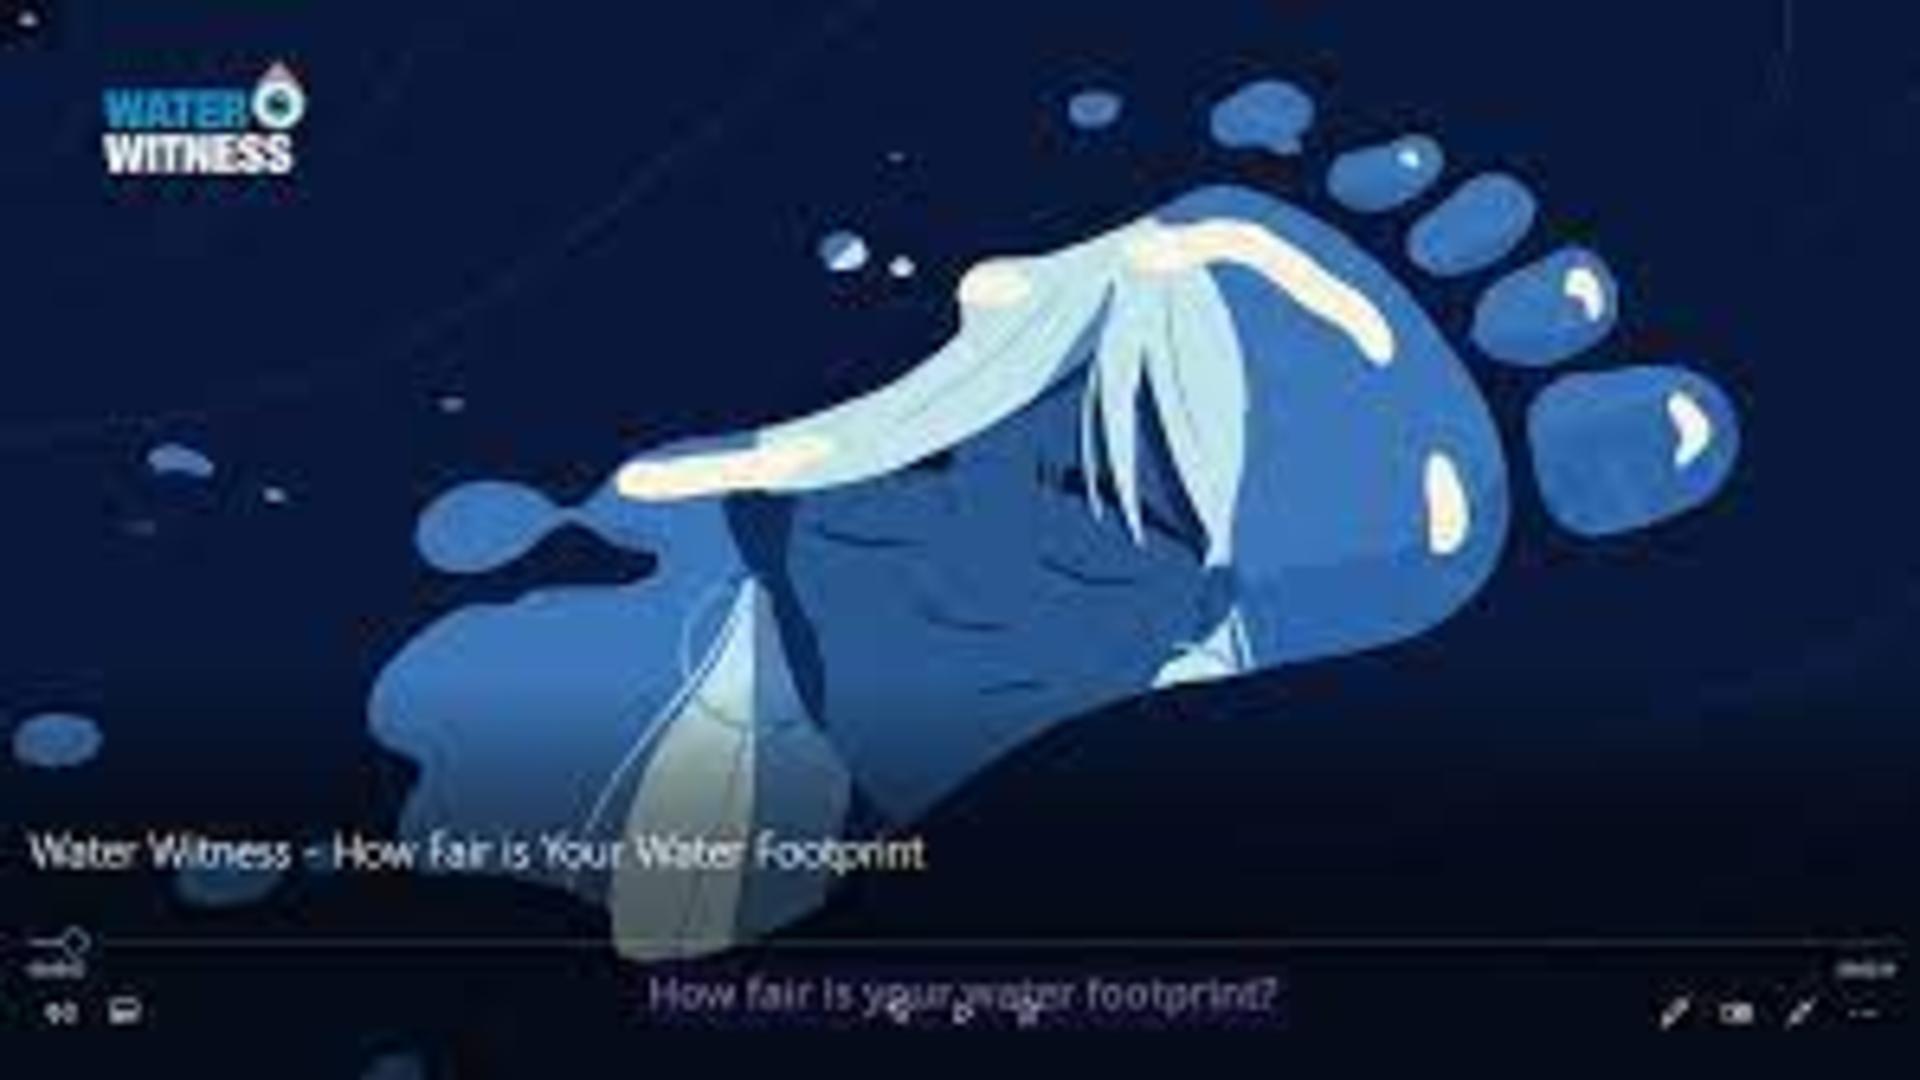 PARTNER VIDEO: Water Witness - How Fair is Your Water Footprint?